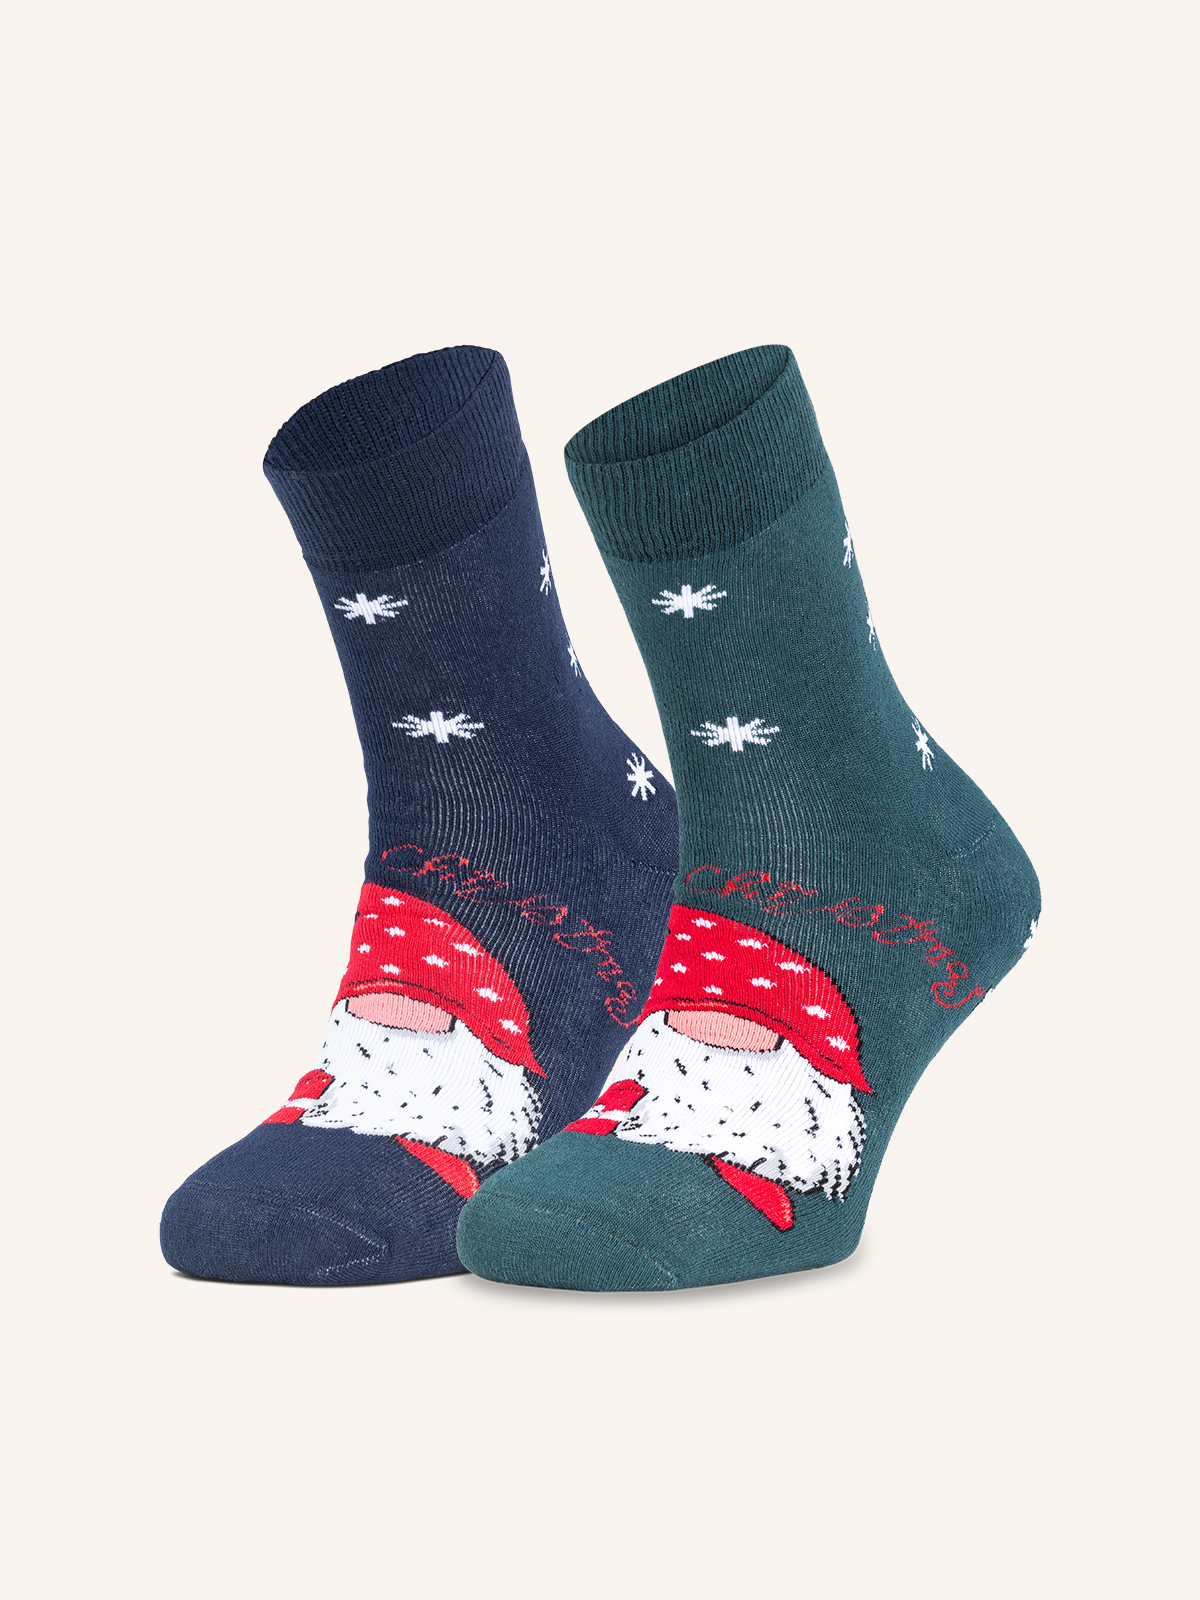 Short Anti-slip Cotton Socks for Men | Christmas Fantasy | Pack of 2 pairs | Xmas UA